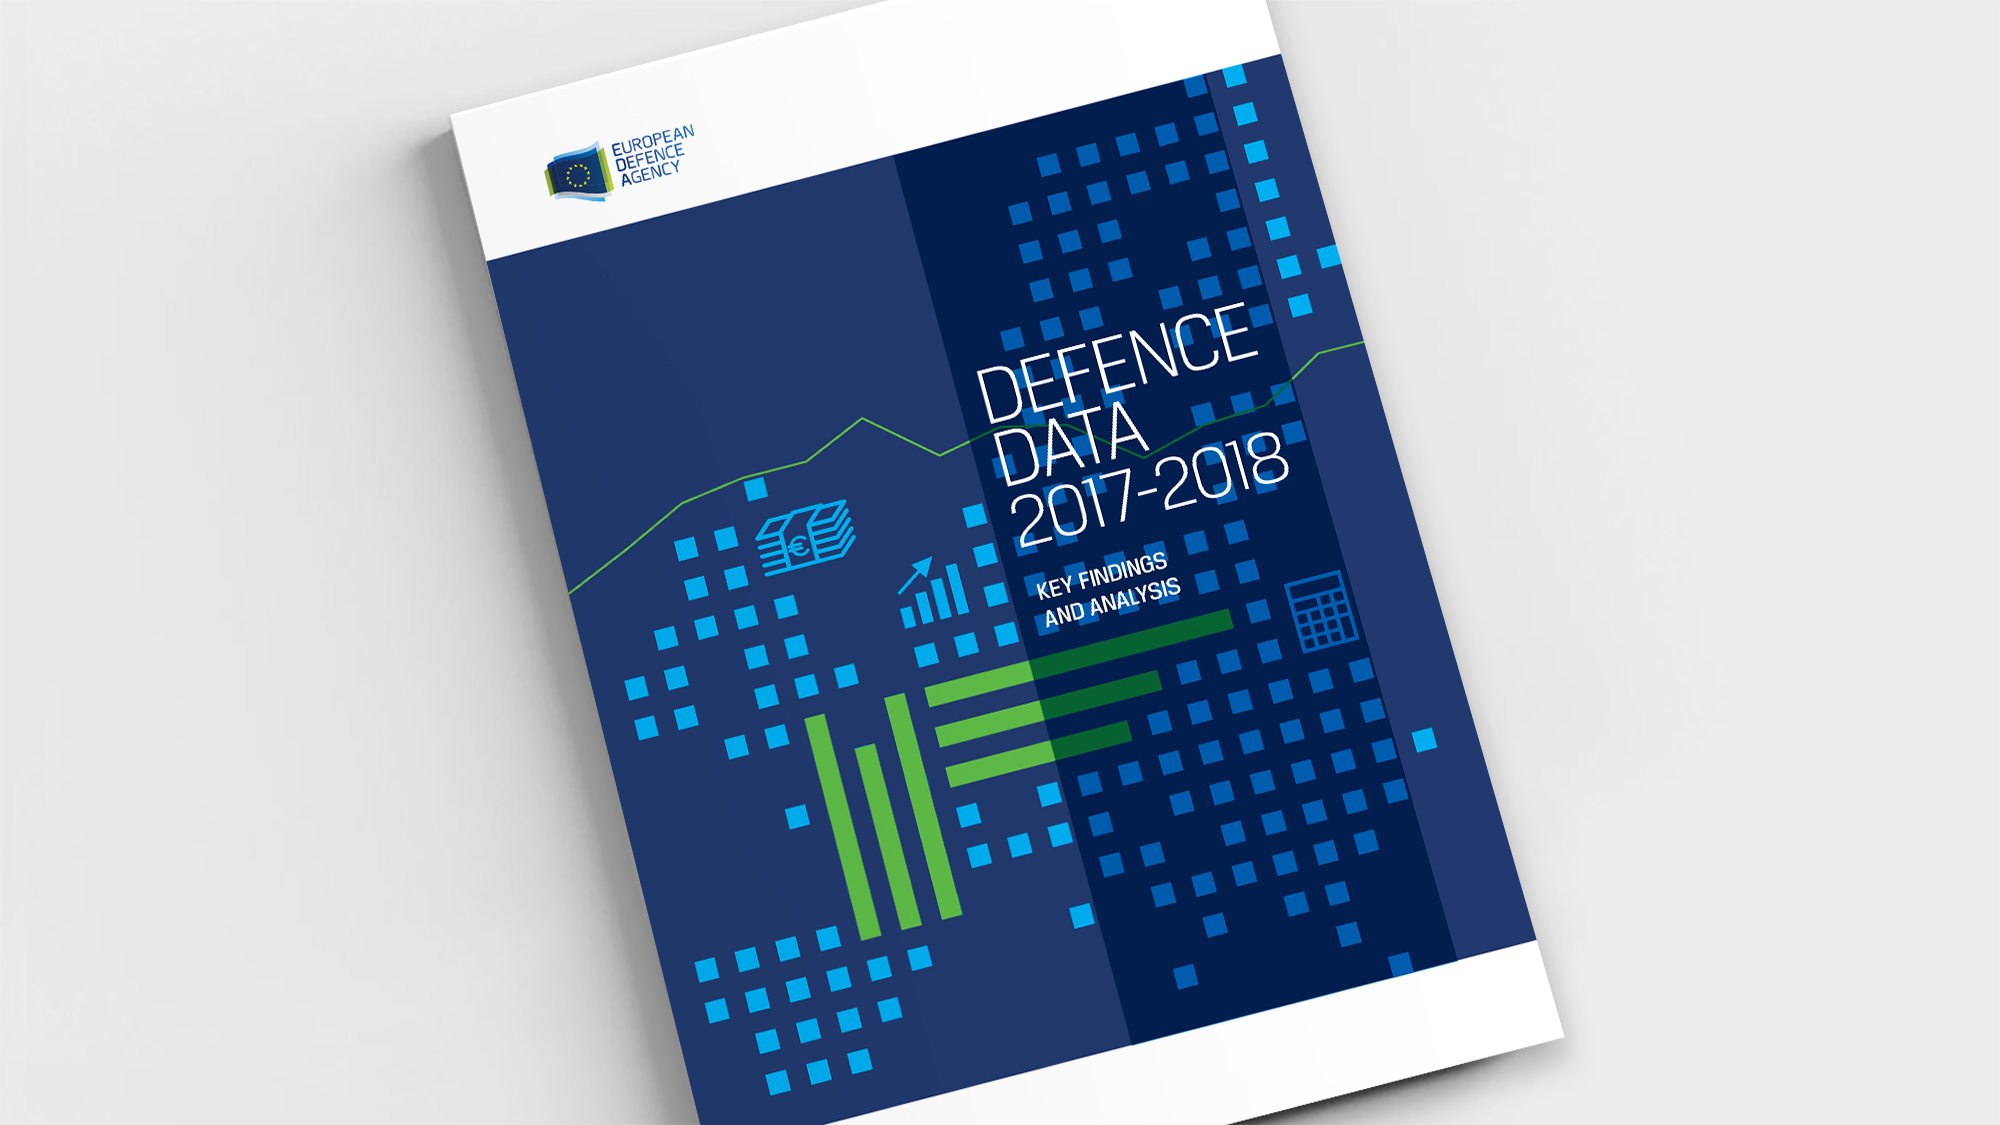 Defence Data 2017-2018